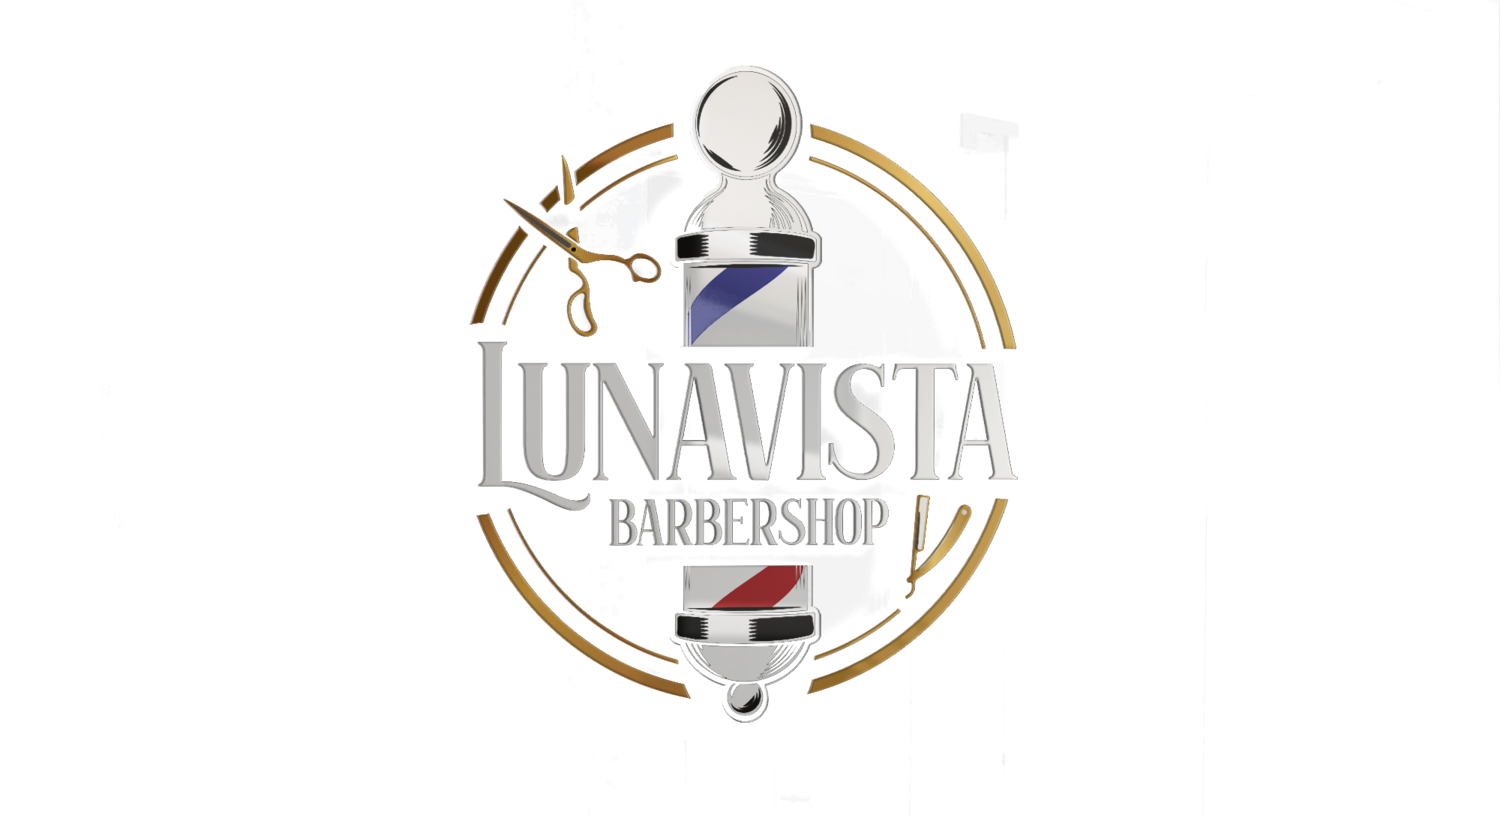 Lunavista Barbershop